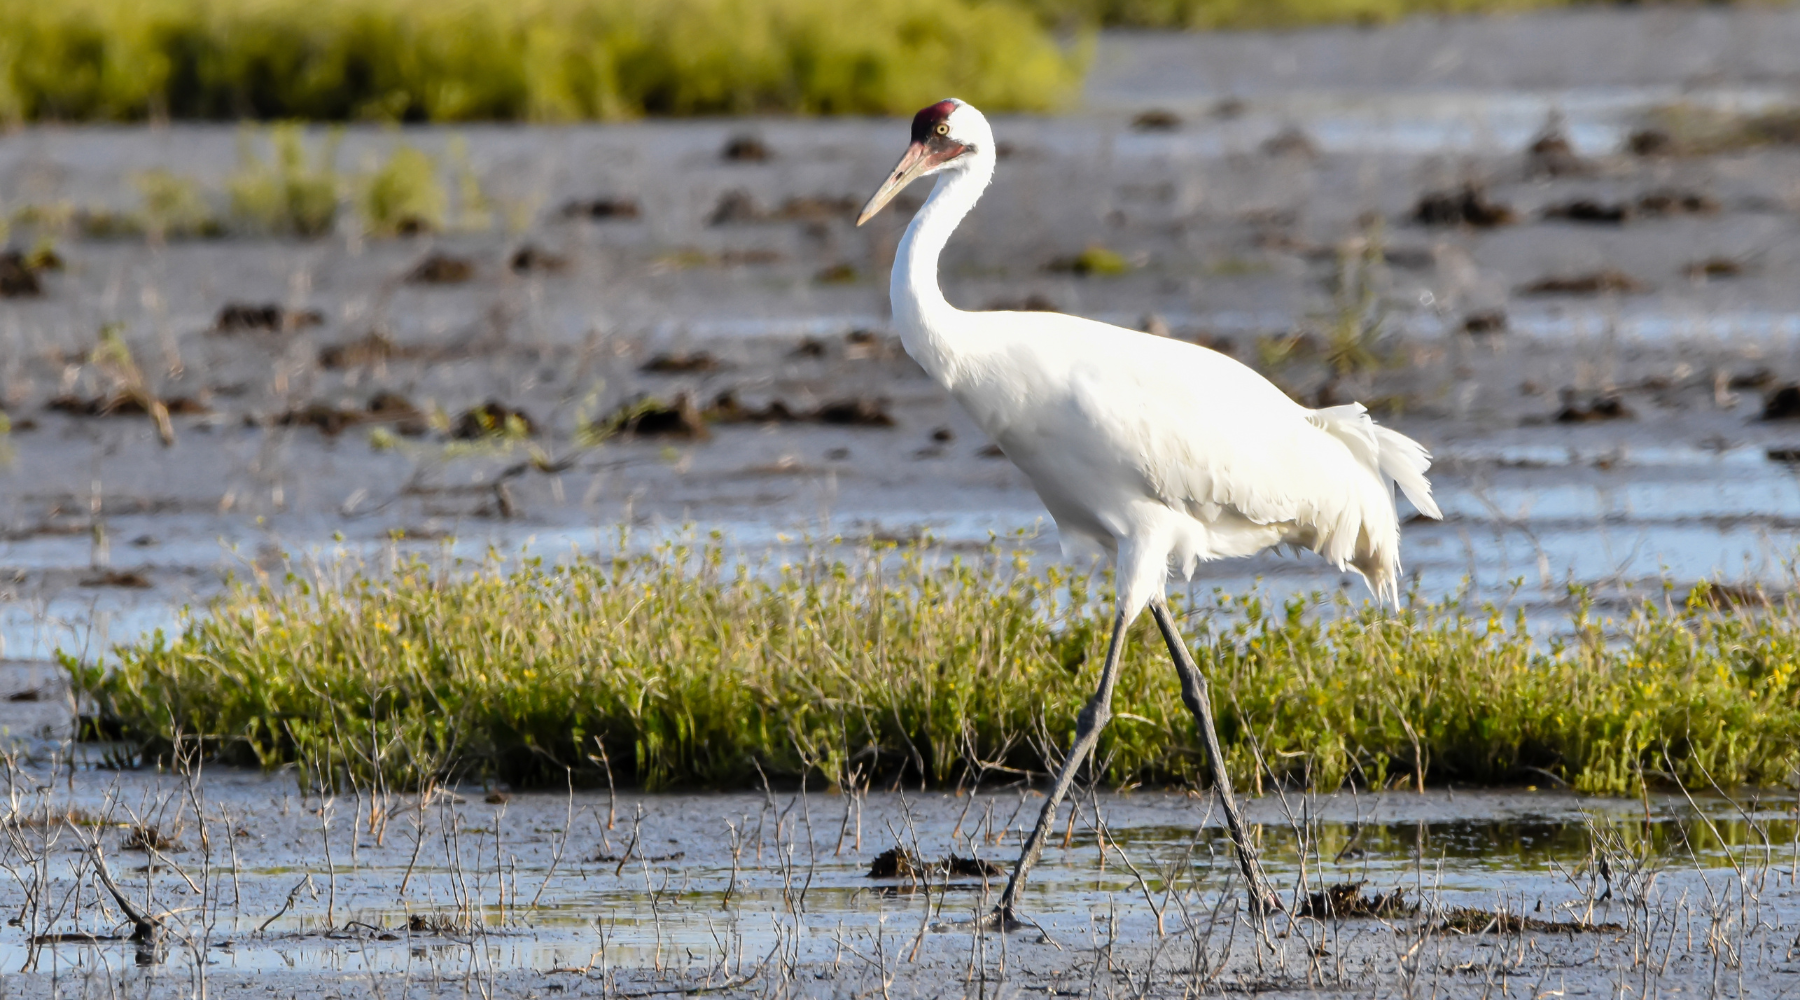 Whooping crane in wetlands